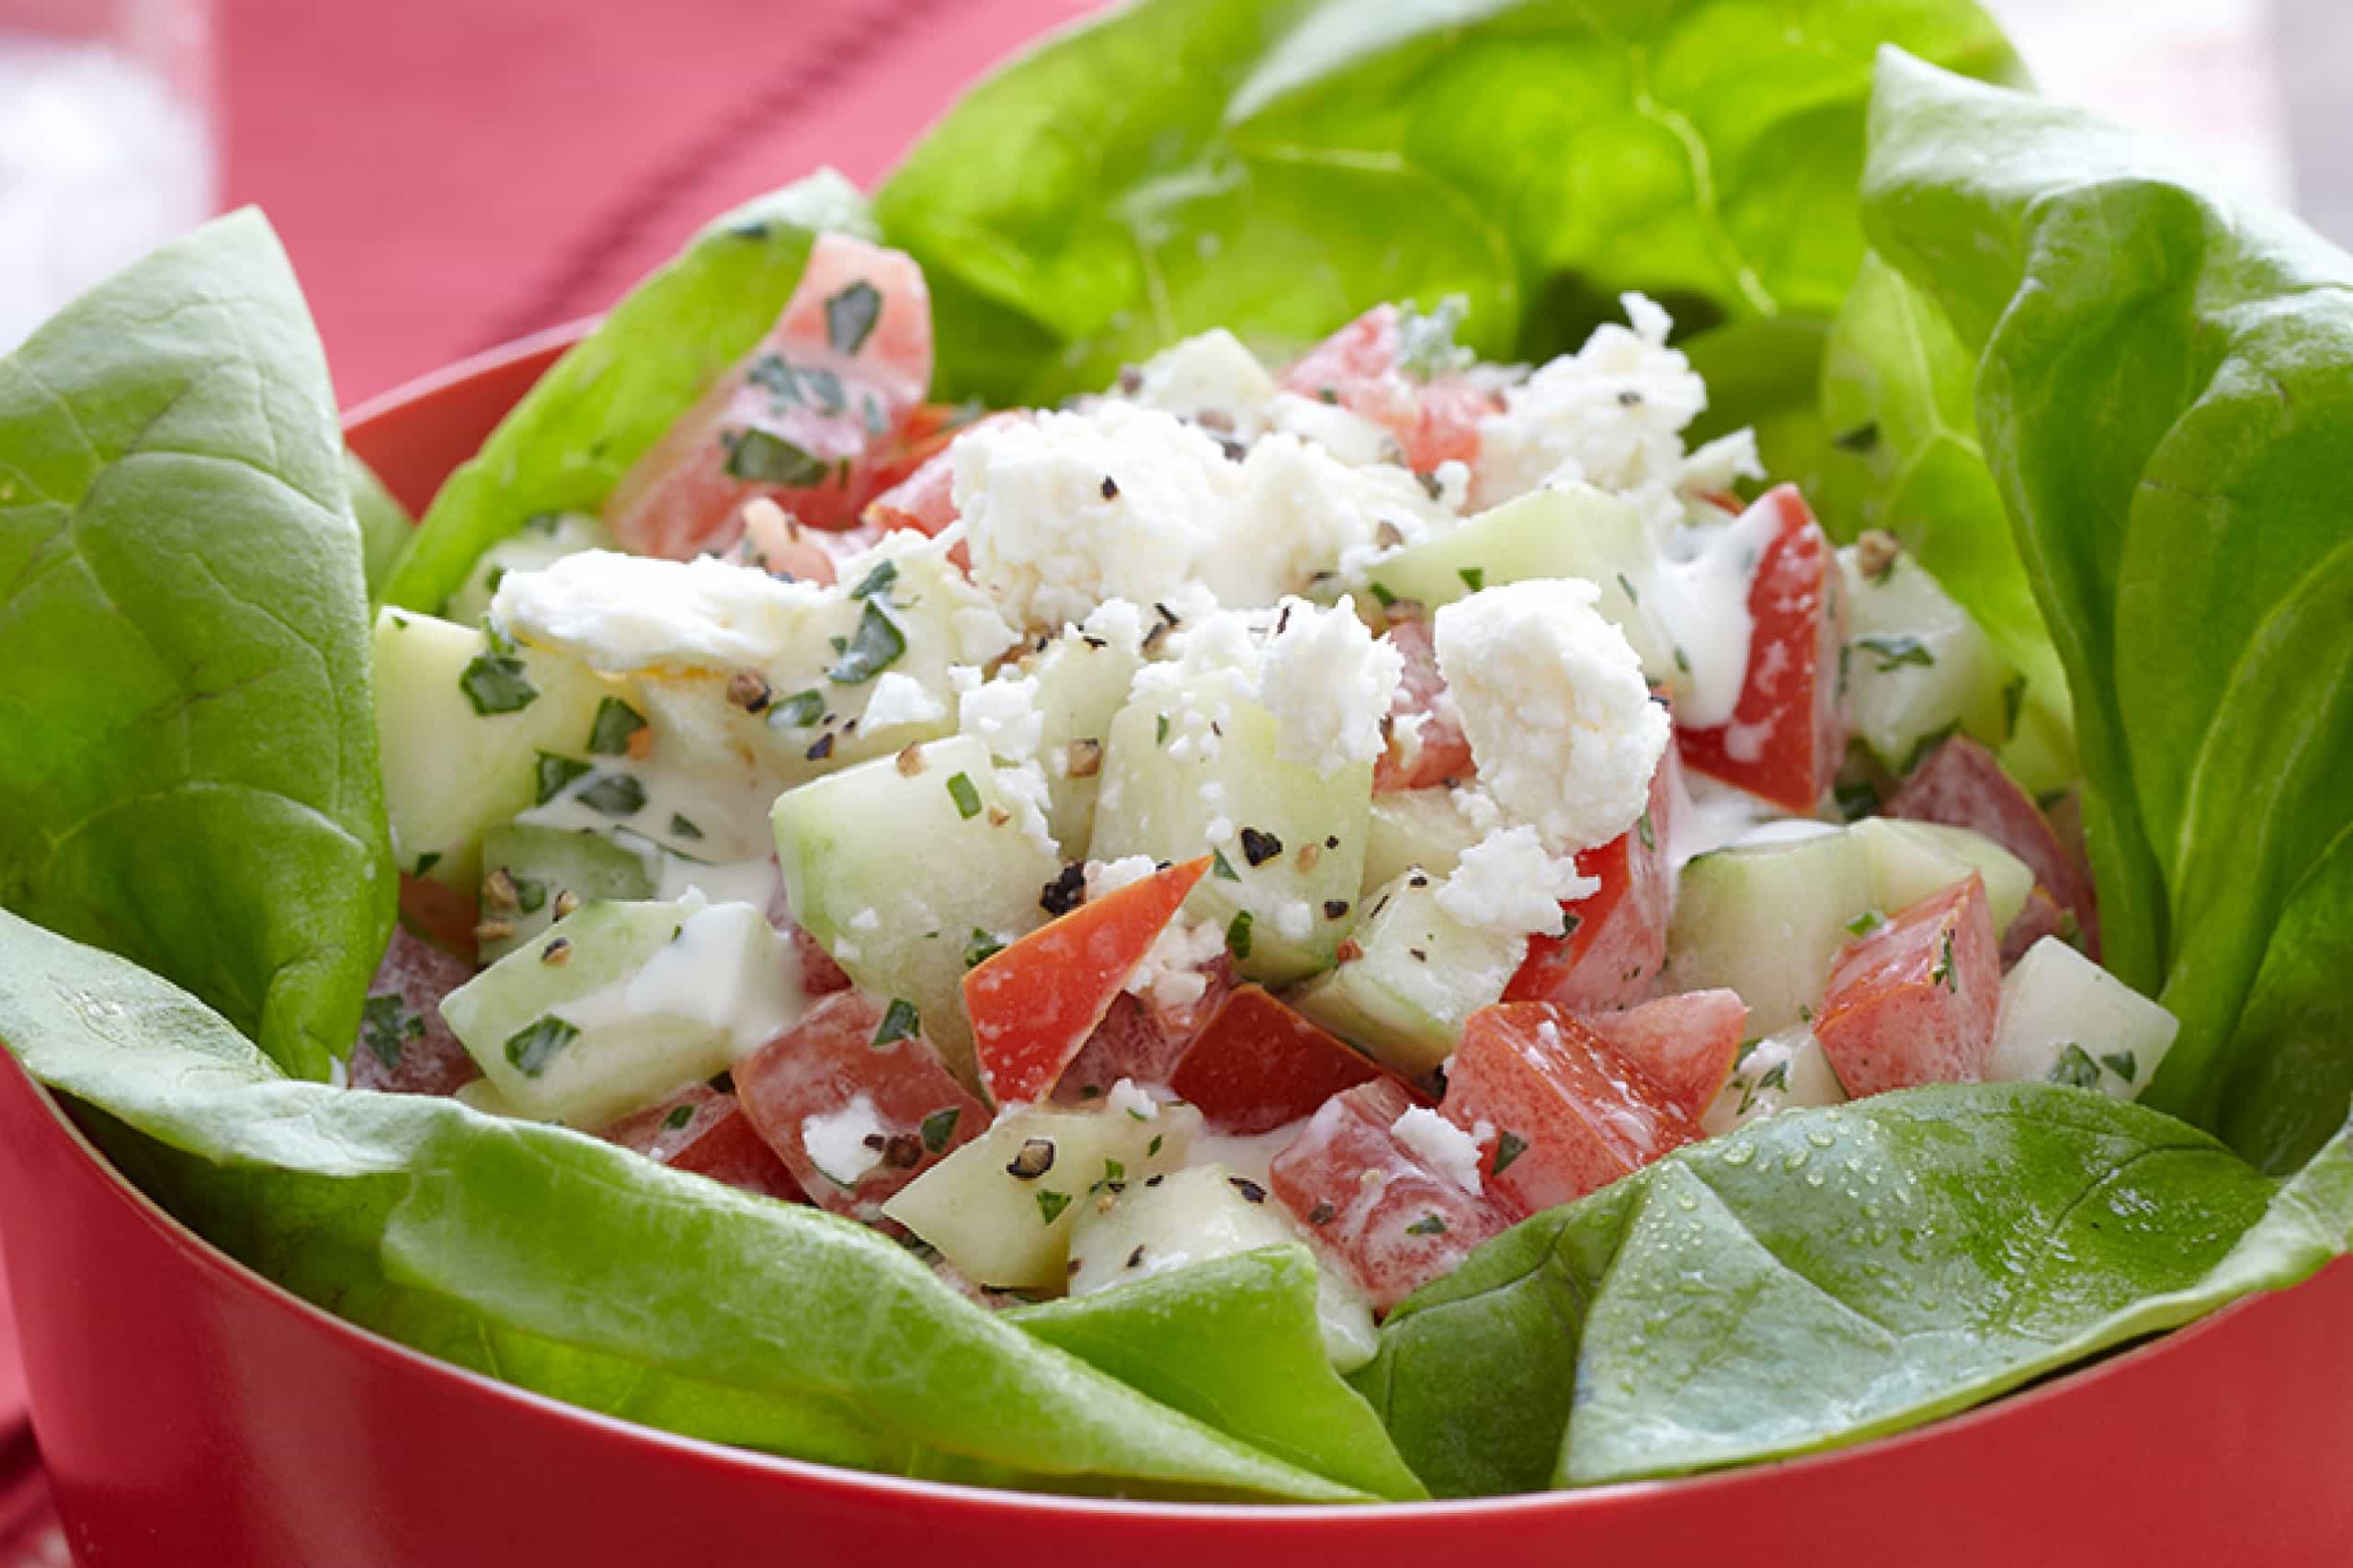 Cool Cucumber and Tomato Salad Recipe